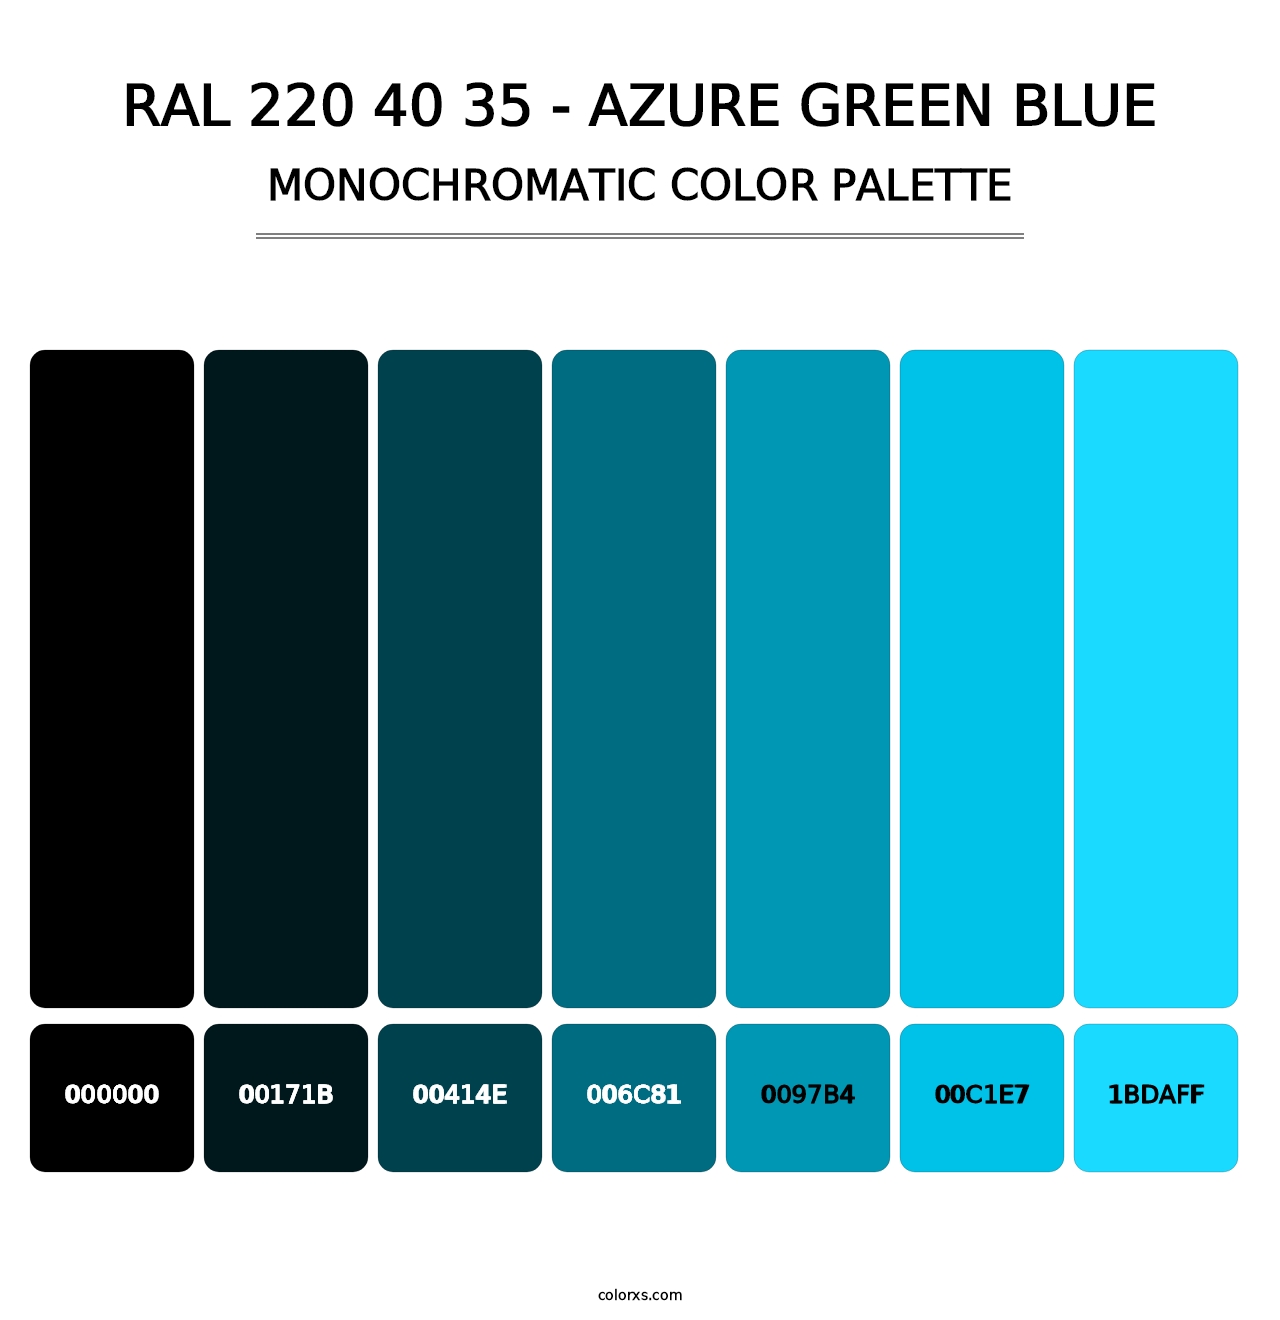 RAL 220 40 35 - Azure Green Blue - Monochromatic Color Palette